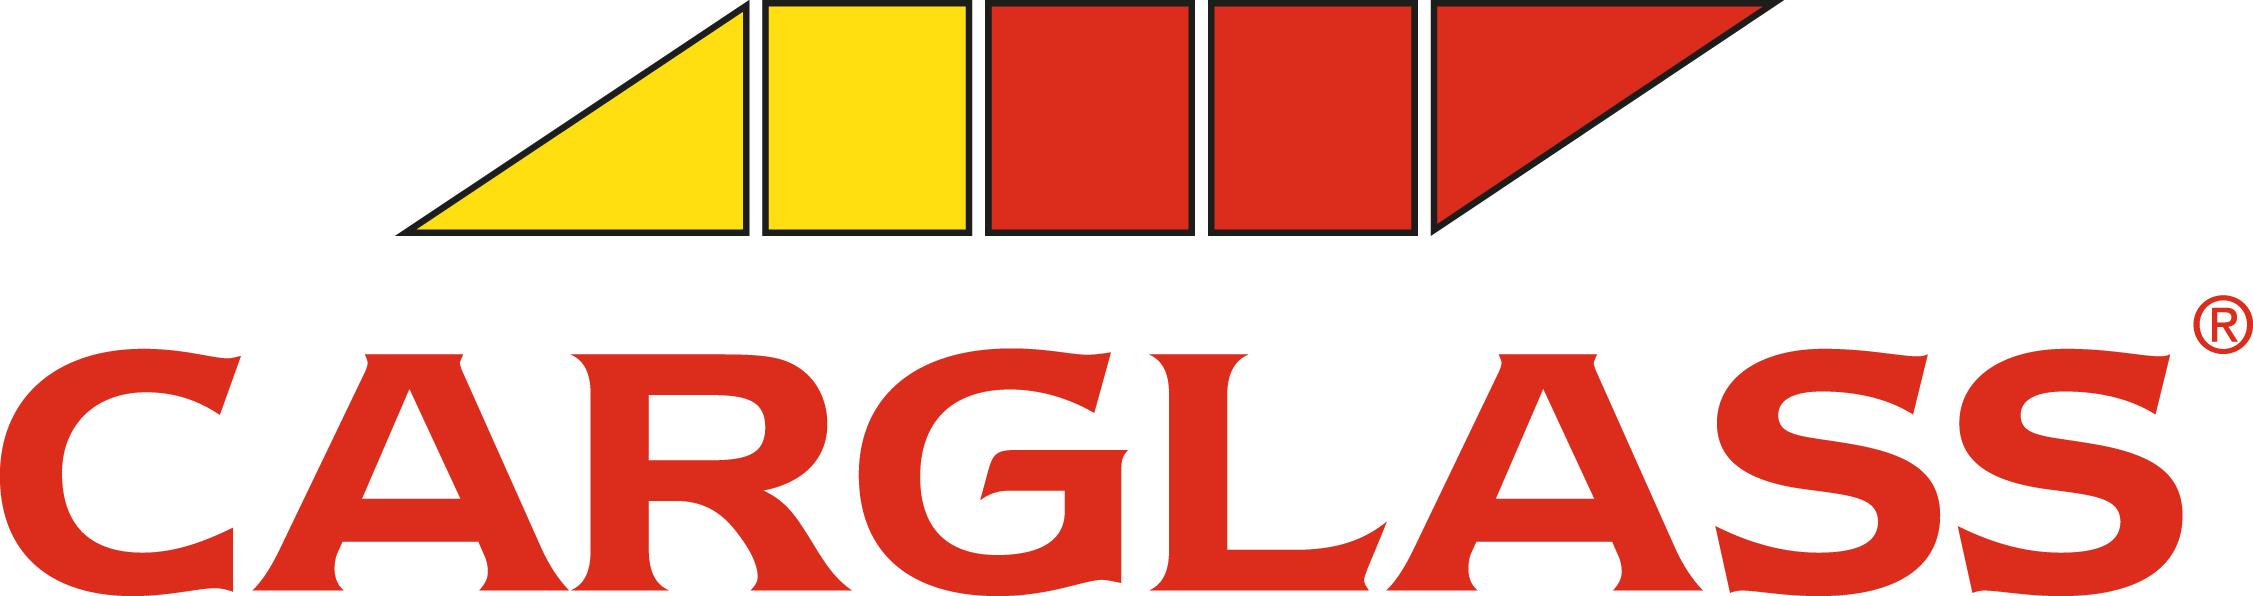 Carglass brand logo